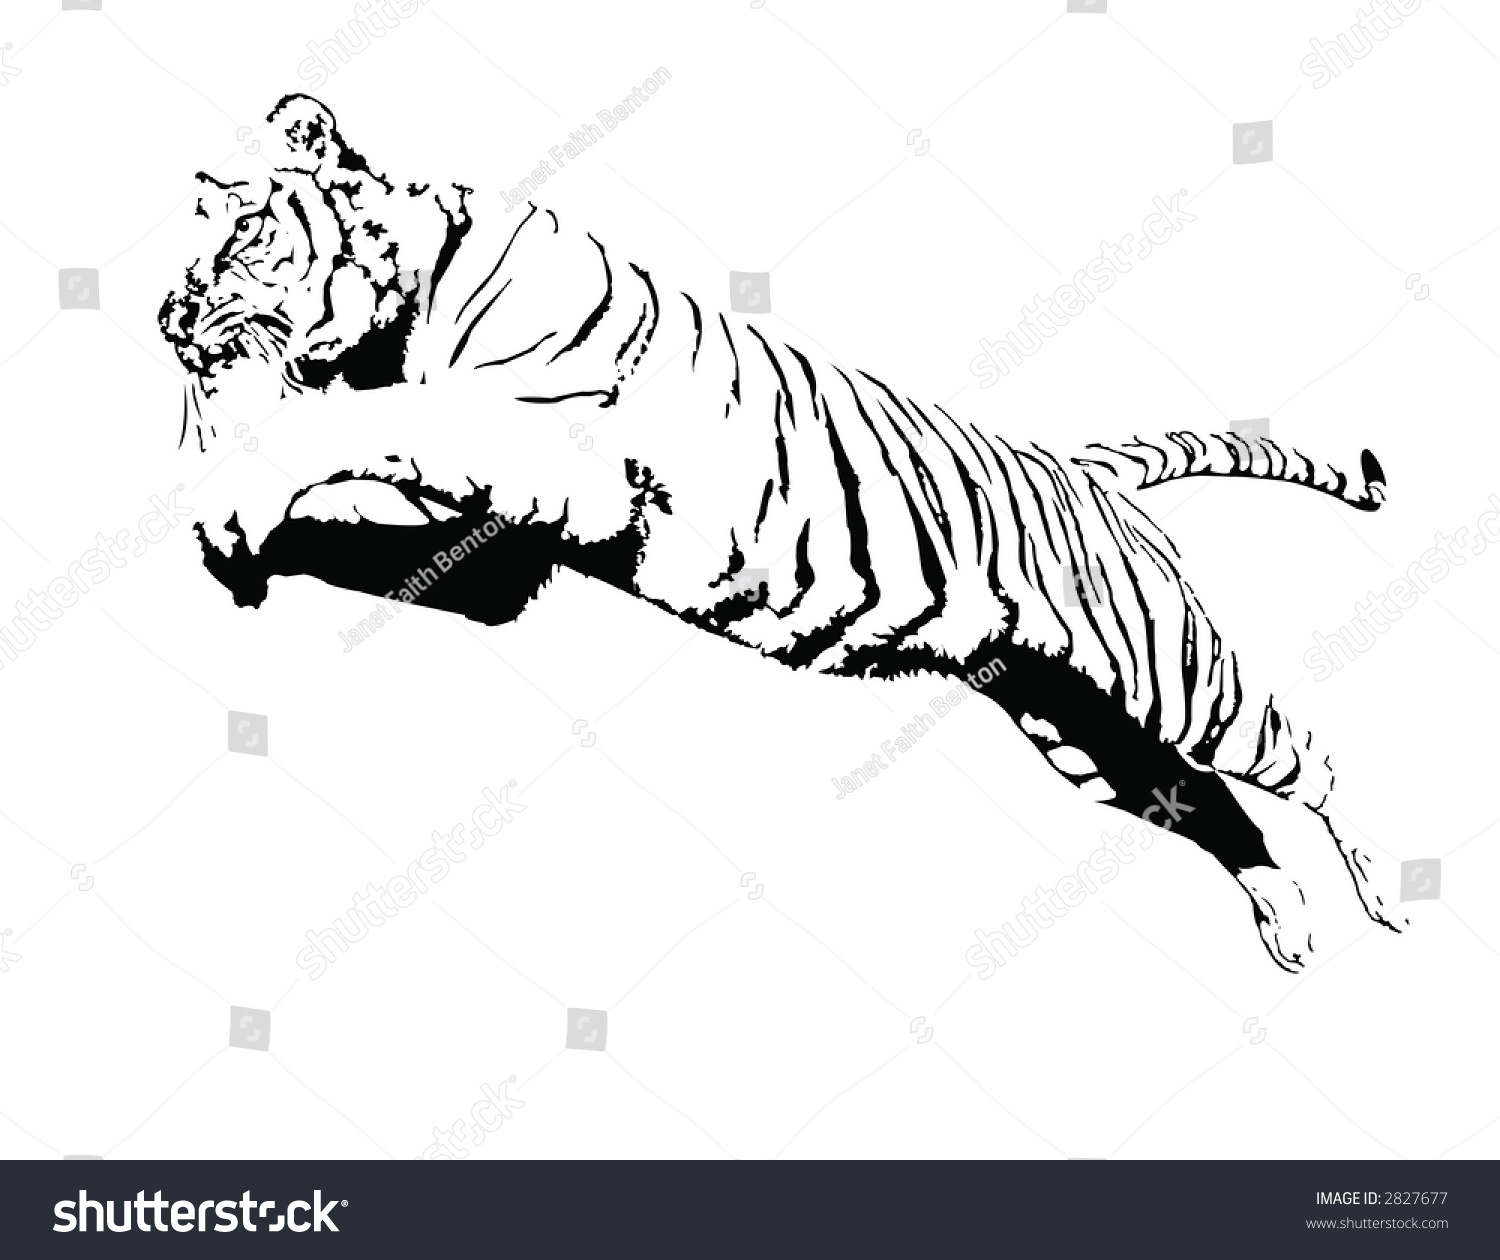 Jumping Tiger Stock Photo 2827677 : Shutterstock